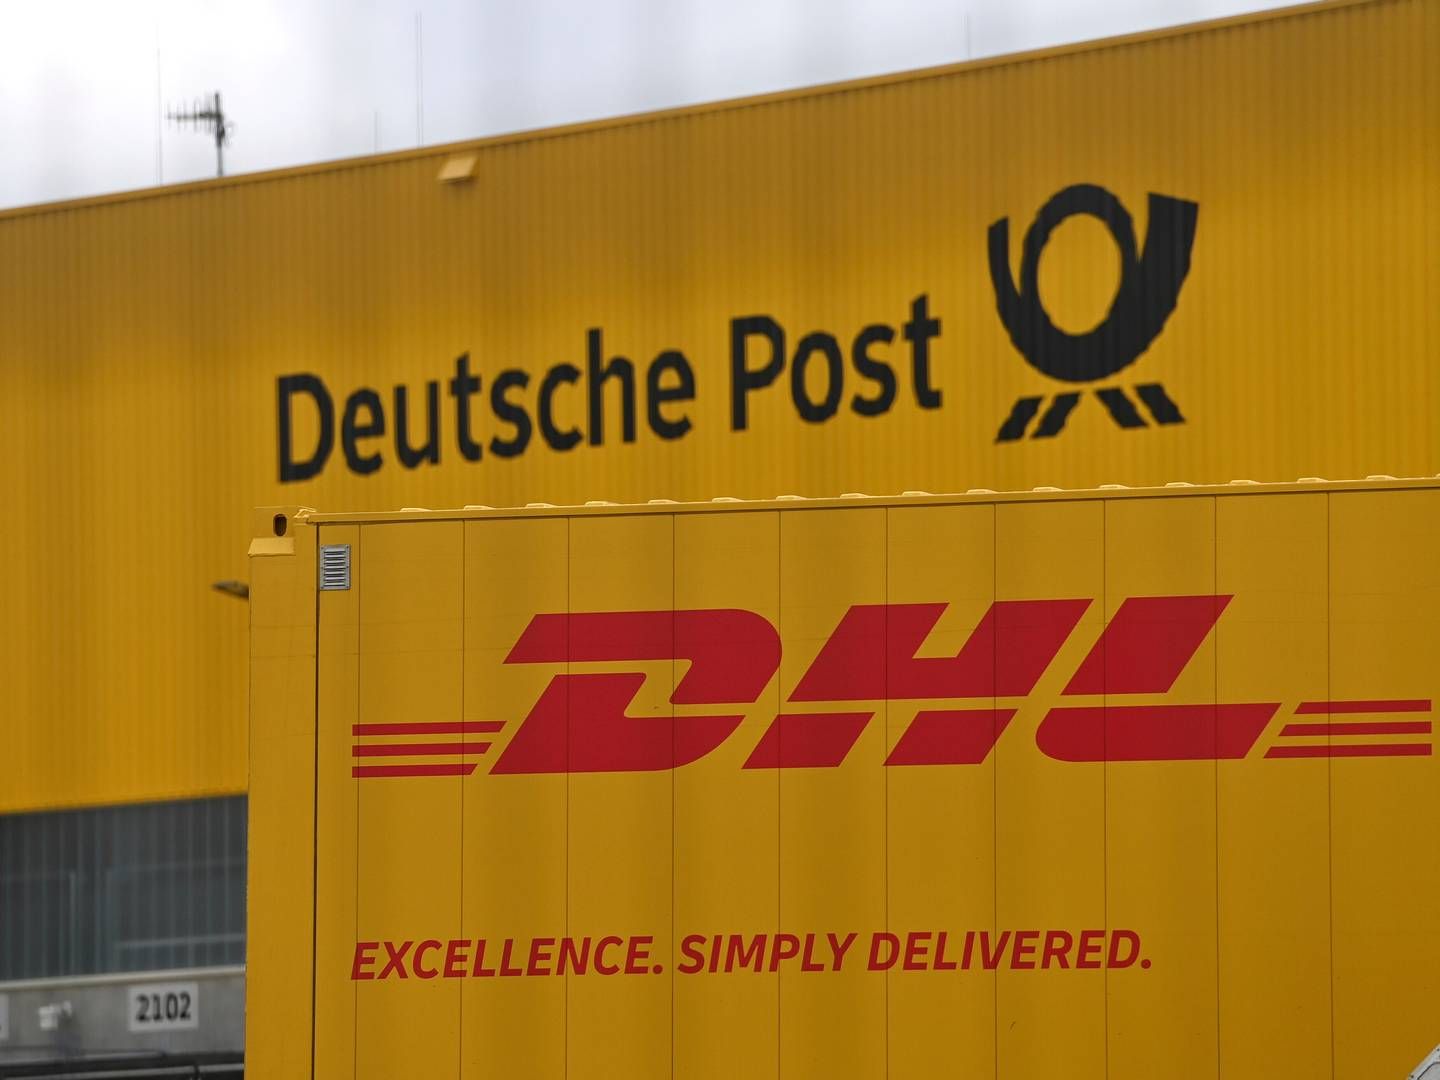 Tyskland vil sælge ud af Deutsche Post. | Foto: Frank Hoermann/AP/Ritzau Scanpix